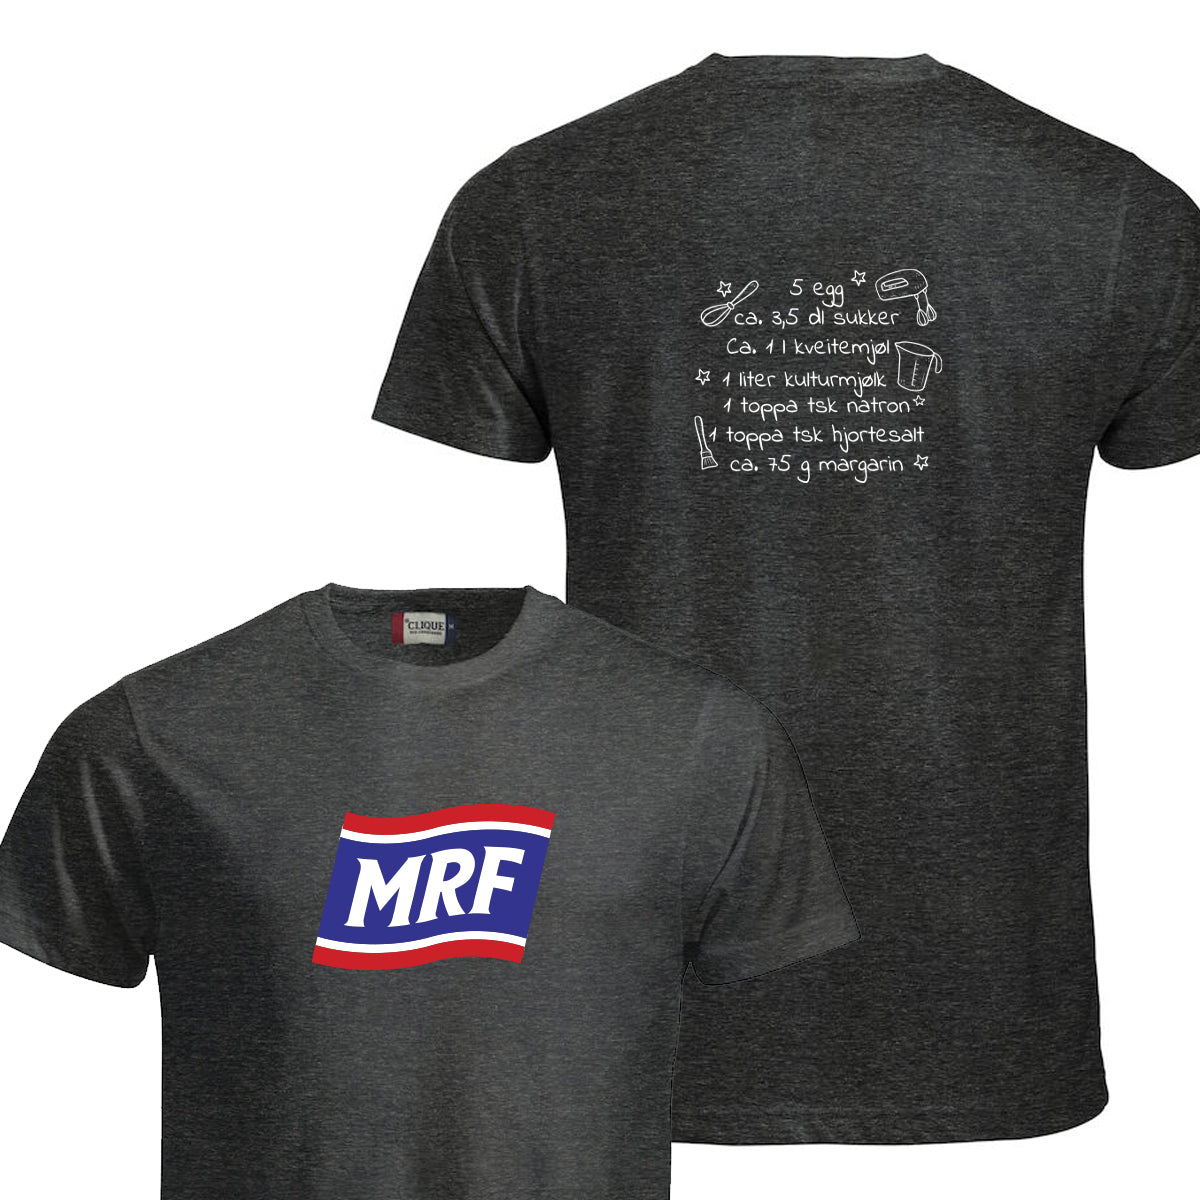 MRF Svelerøre - tskjorte